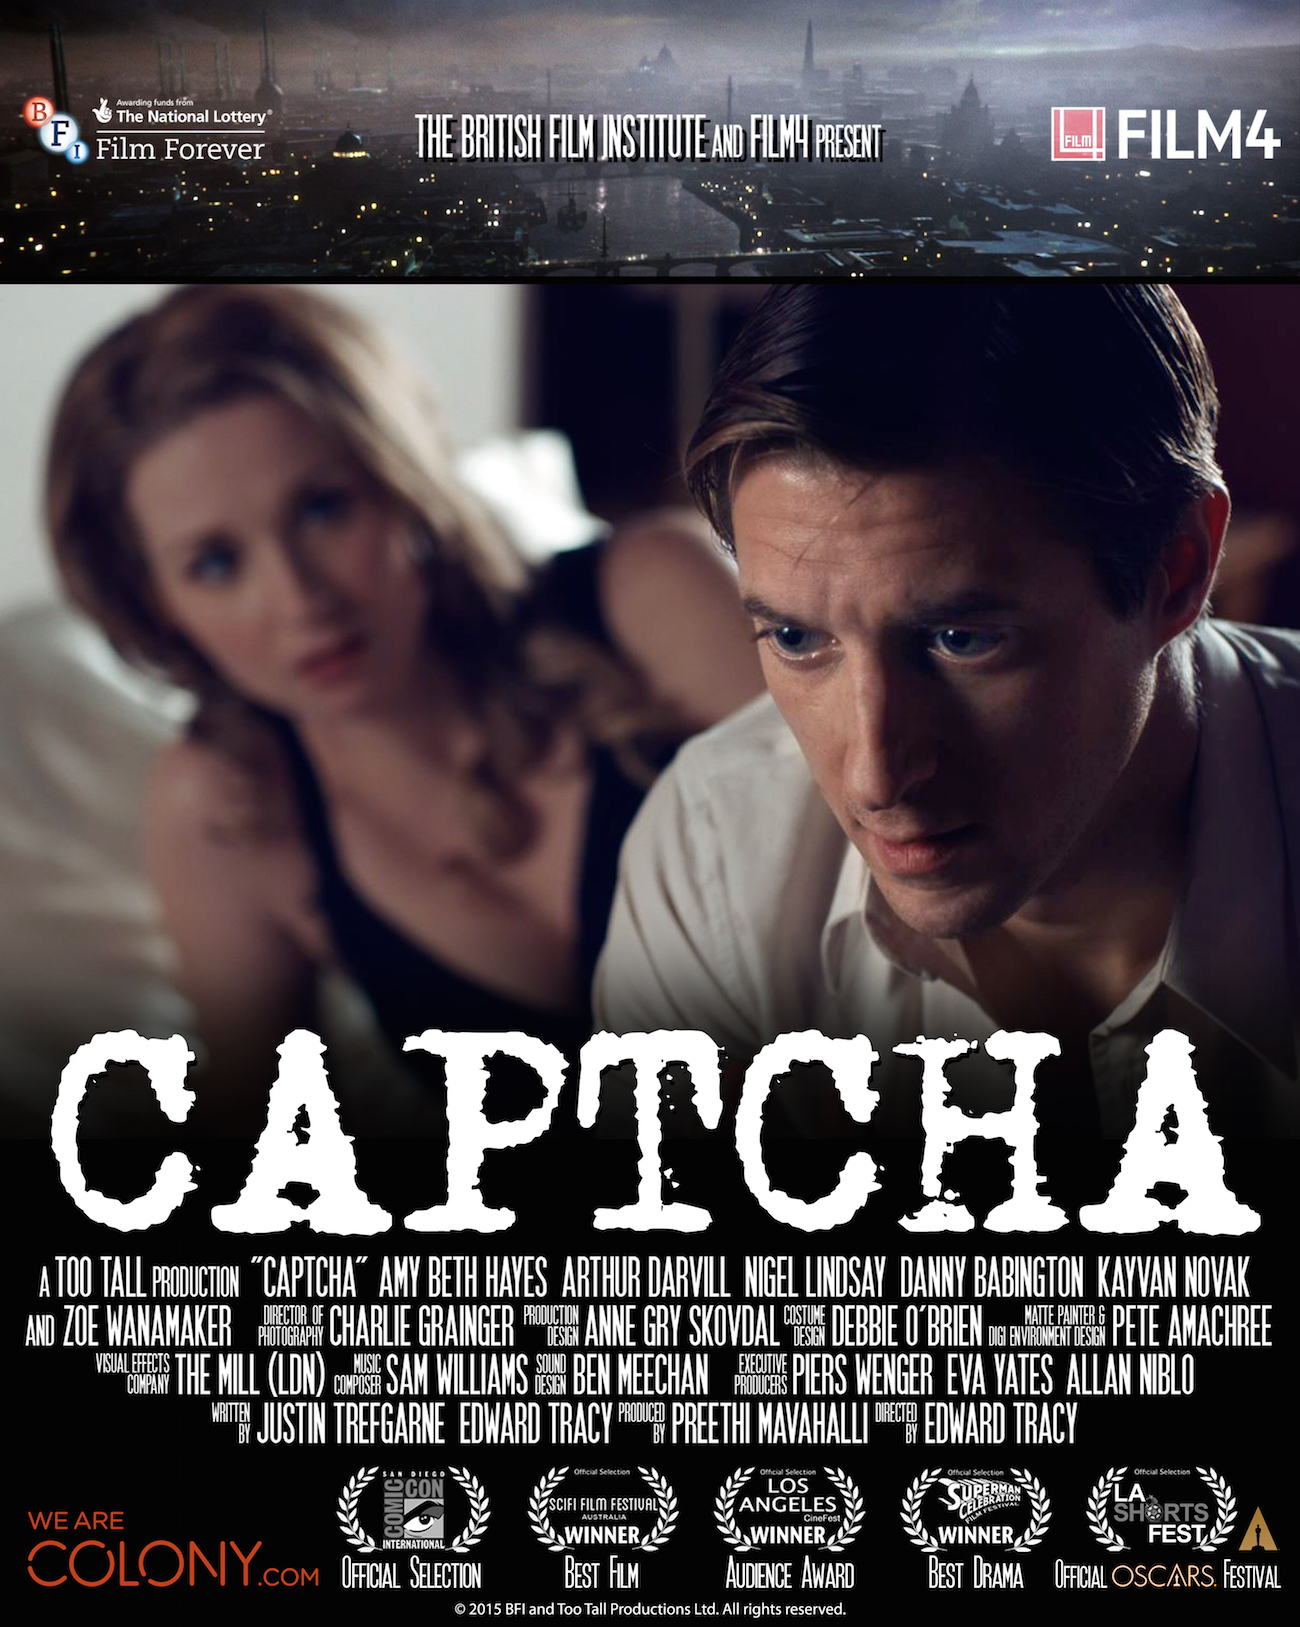 Captcha (2014)